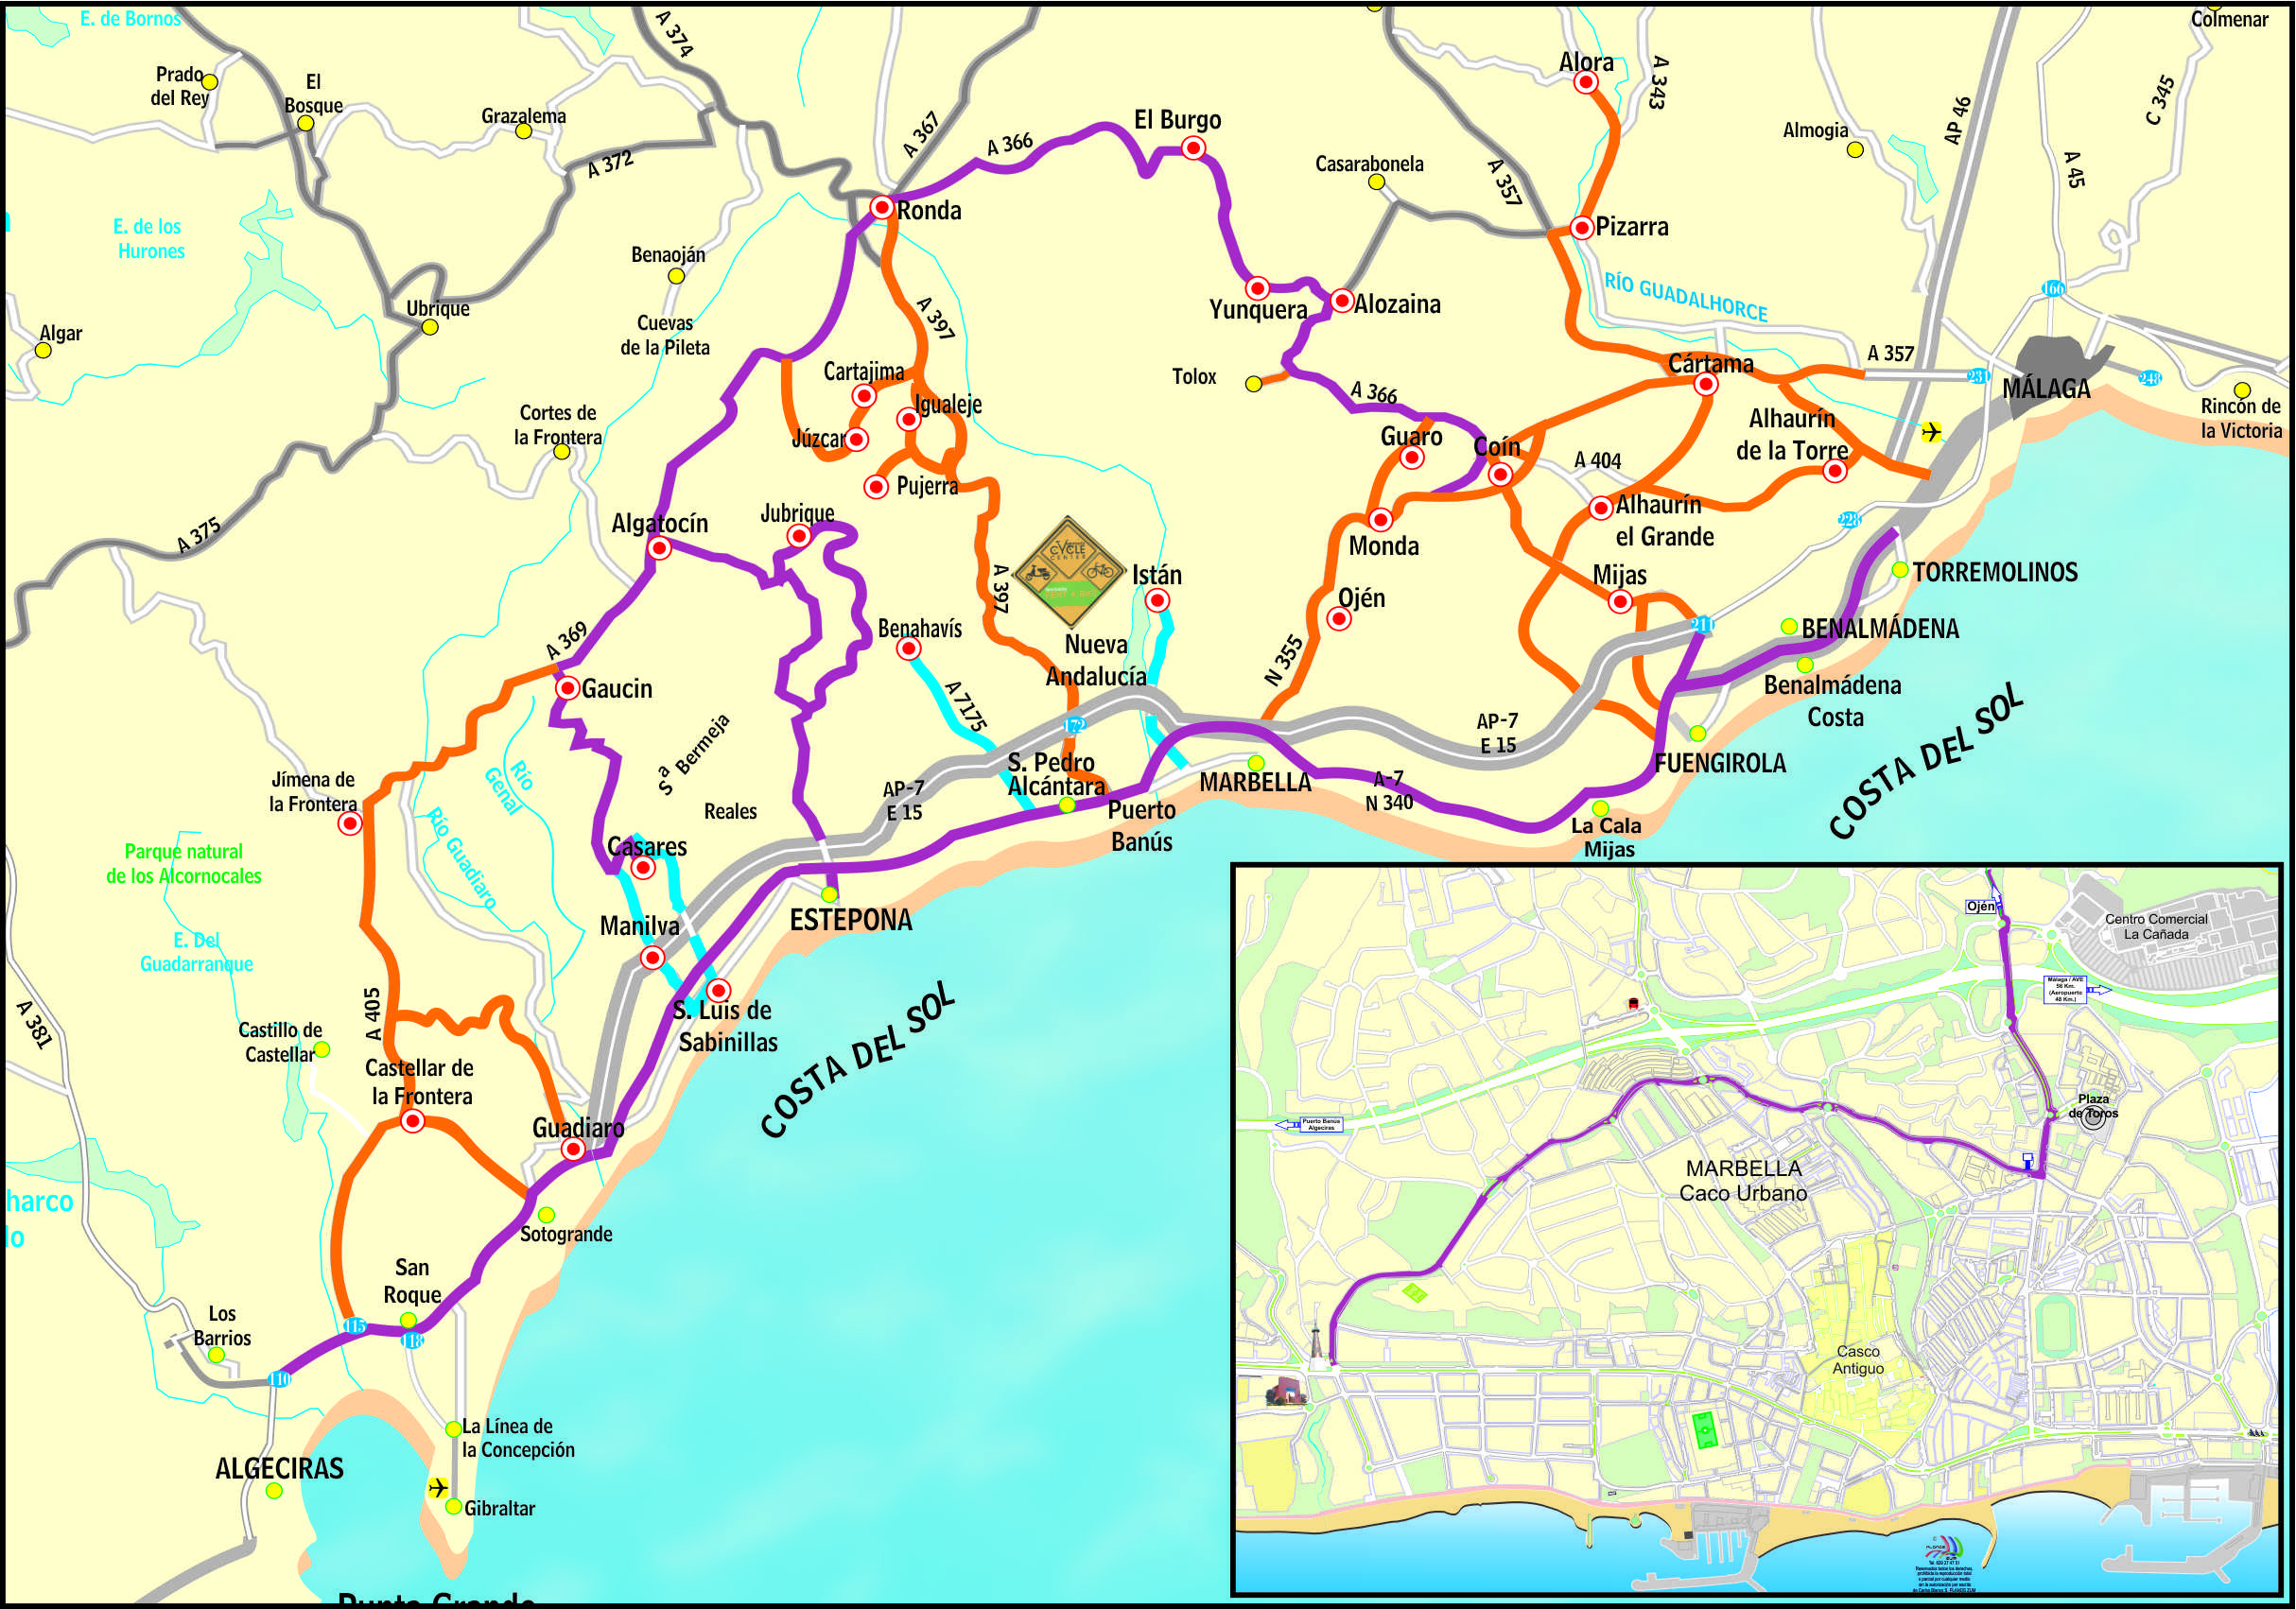 Marbella Map